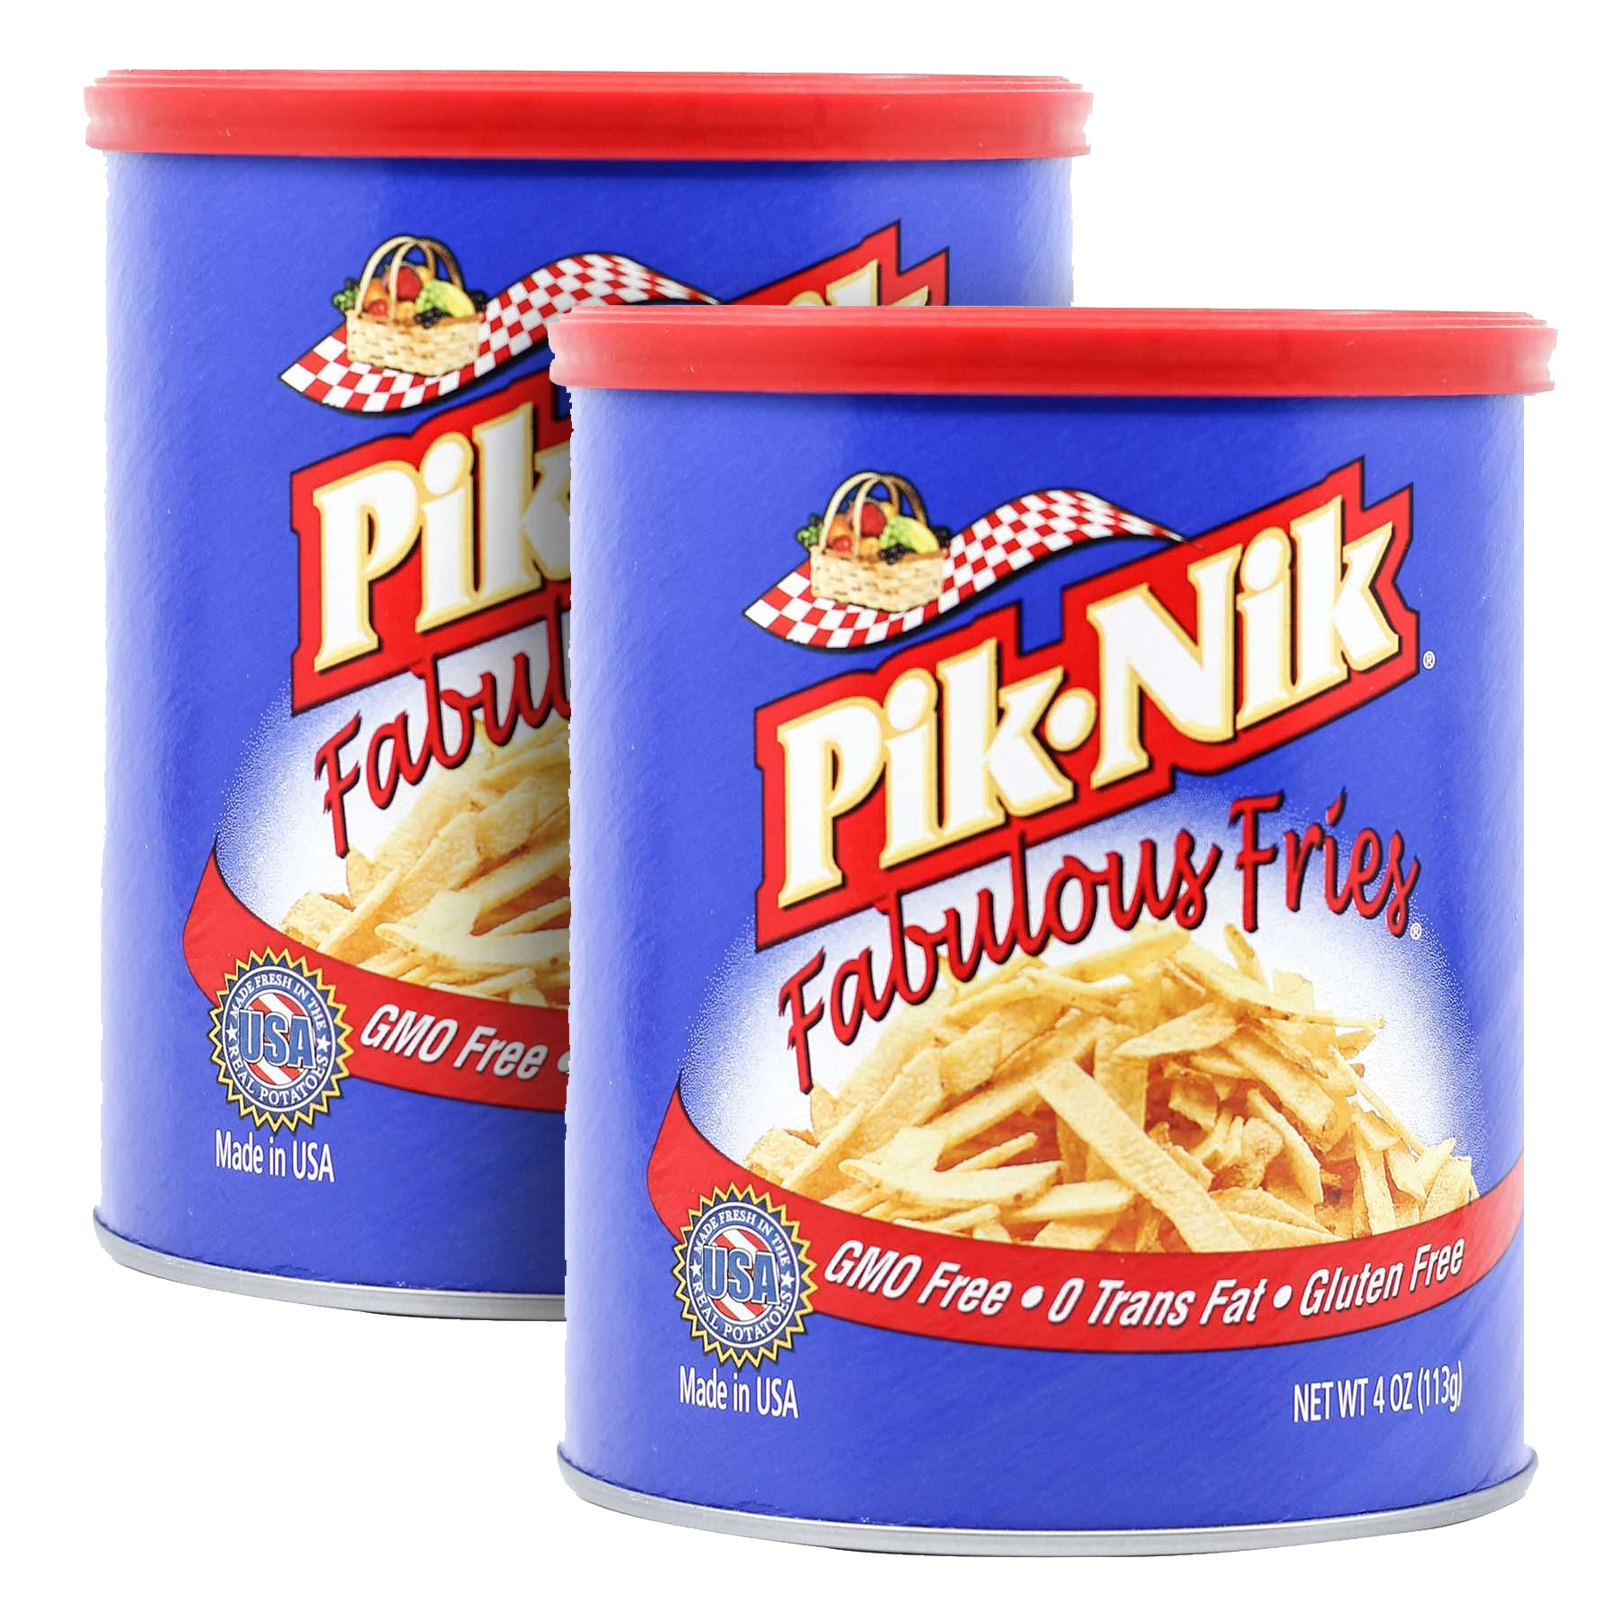 Pik-Nik Fabulous Fries 4oz